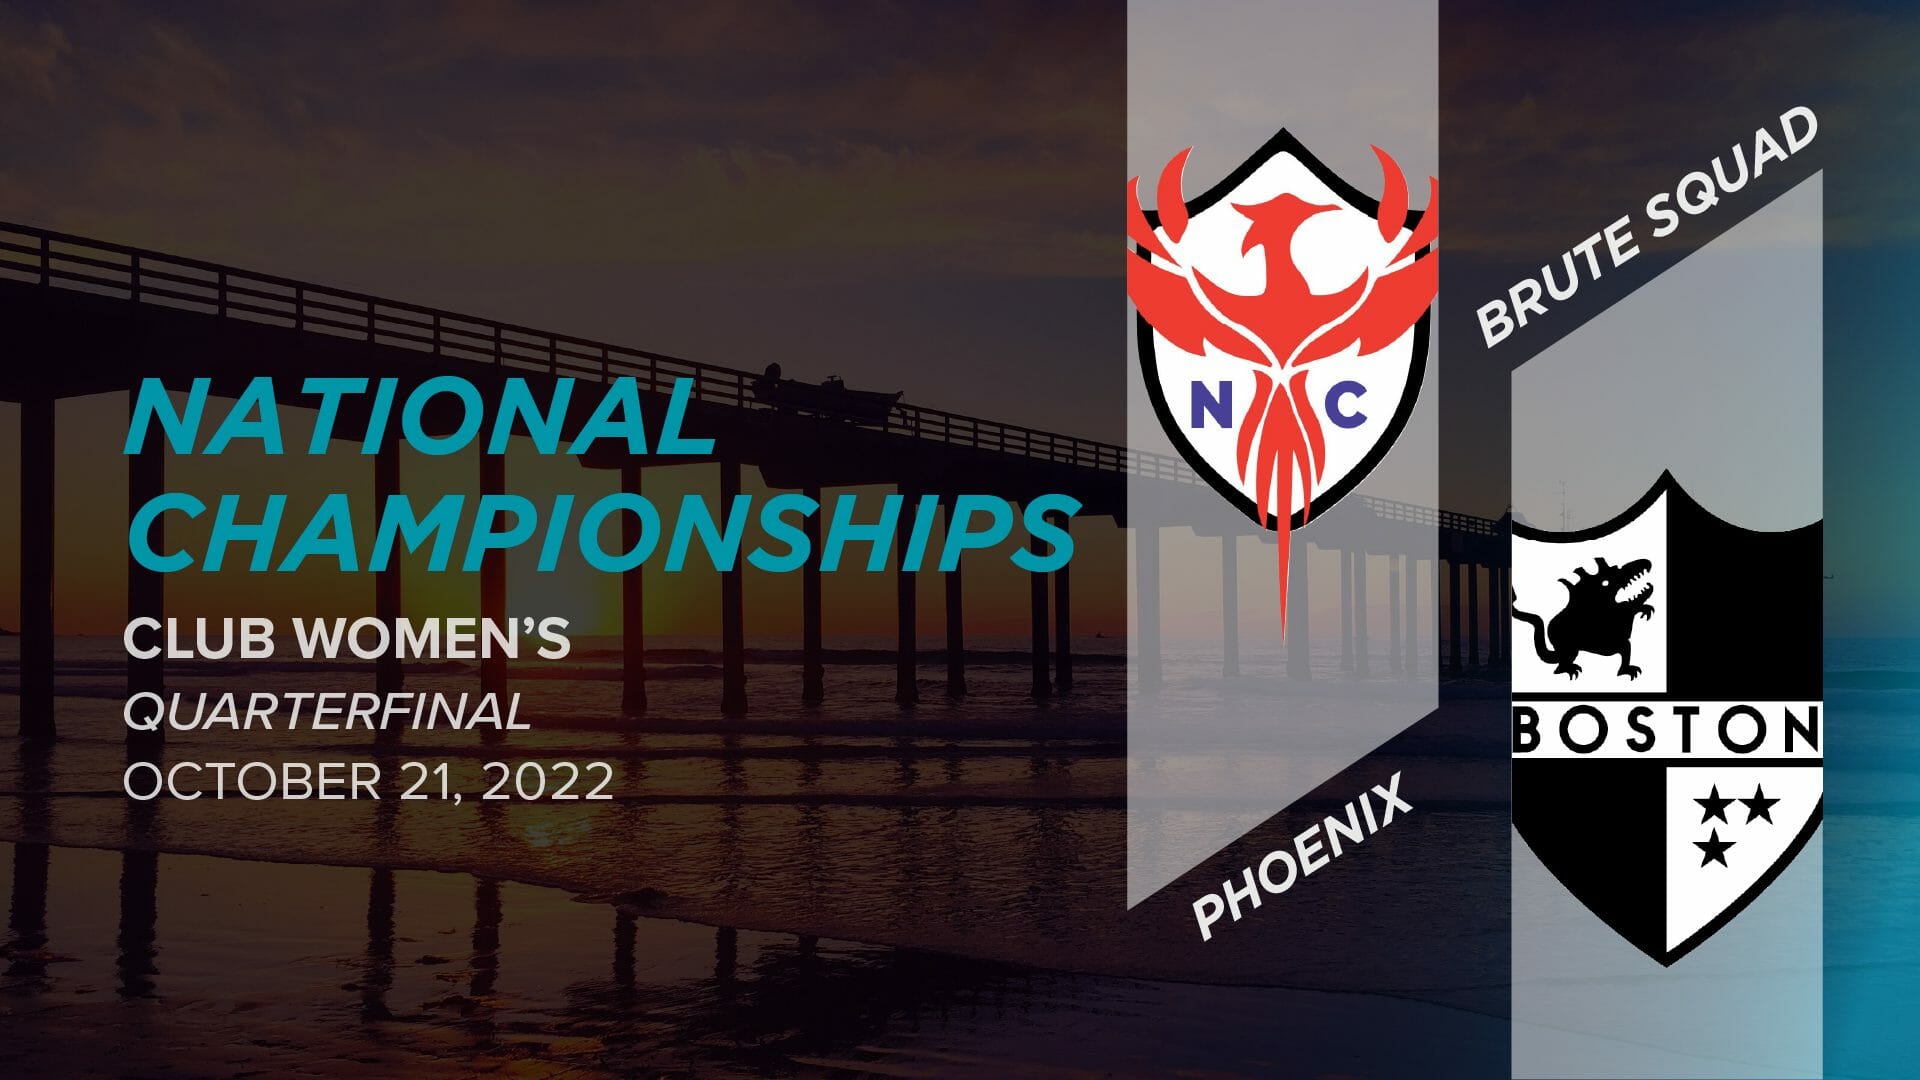 Barclays Women's Championship on X: The final 2021-22 #FAWC